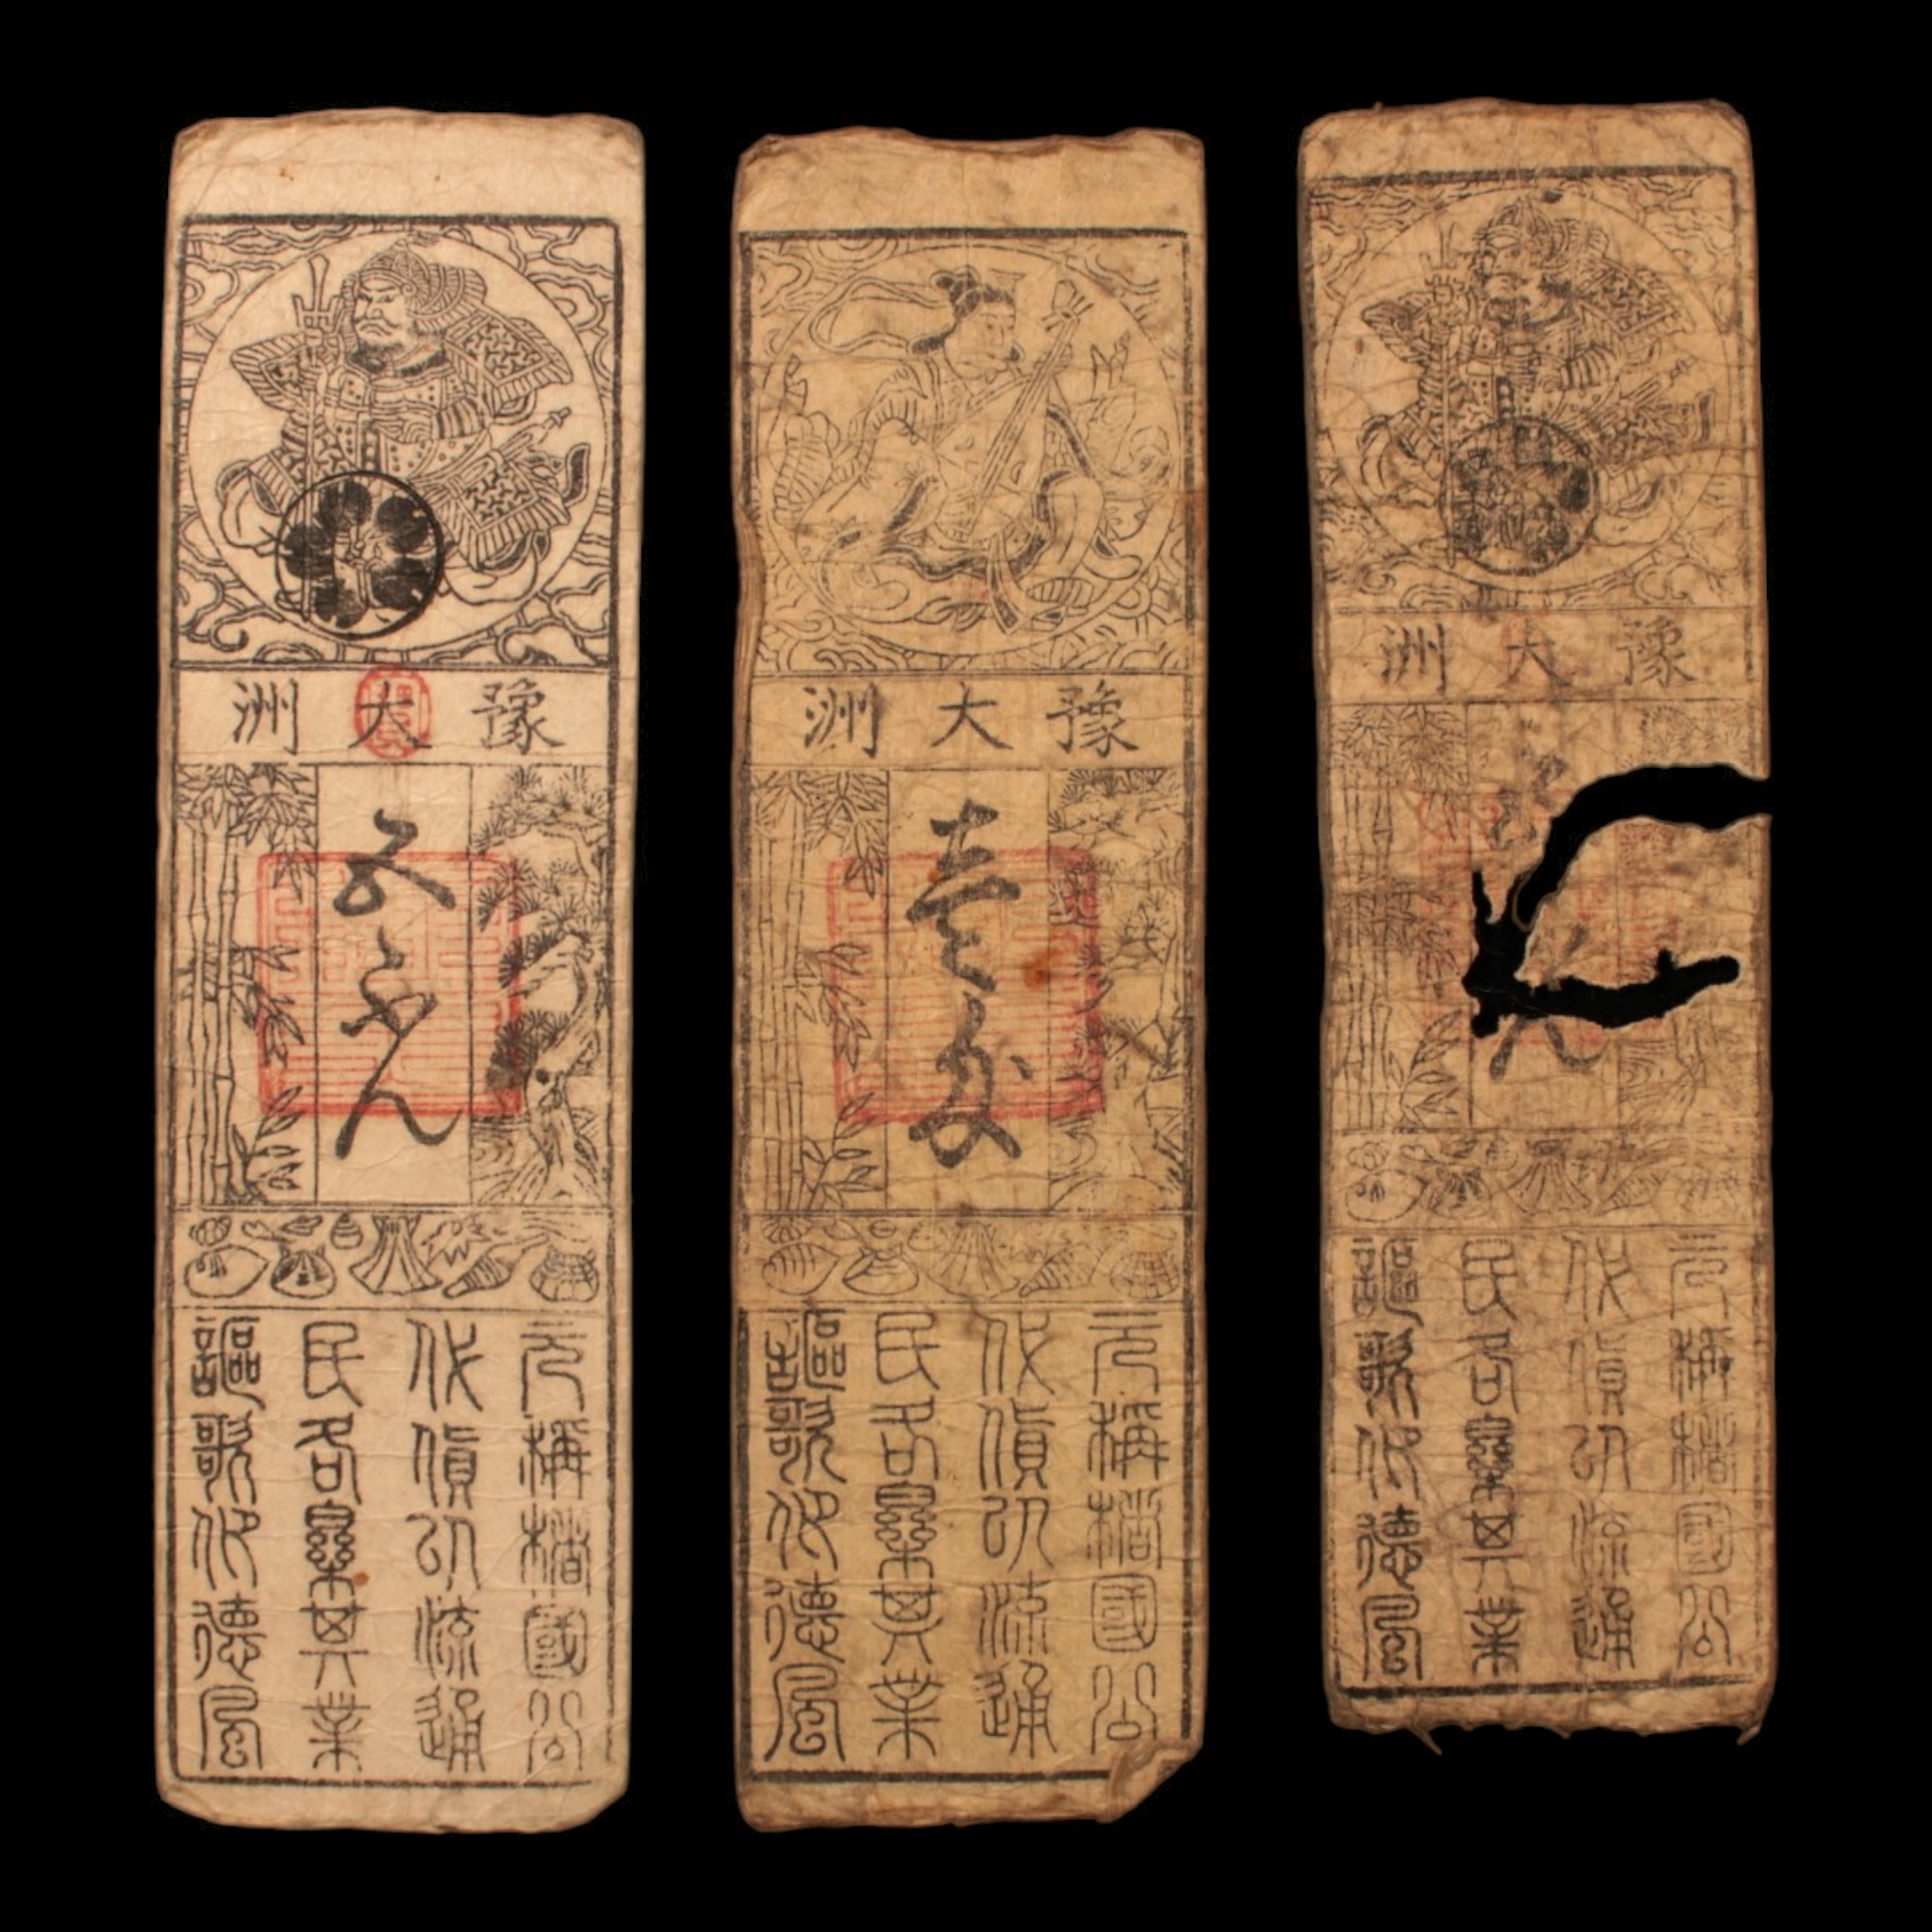 Lot of 3 Hansatsu, Paper Money - c. 1750 to 1870 CE - Japan